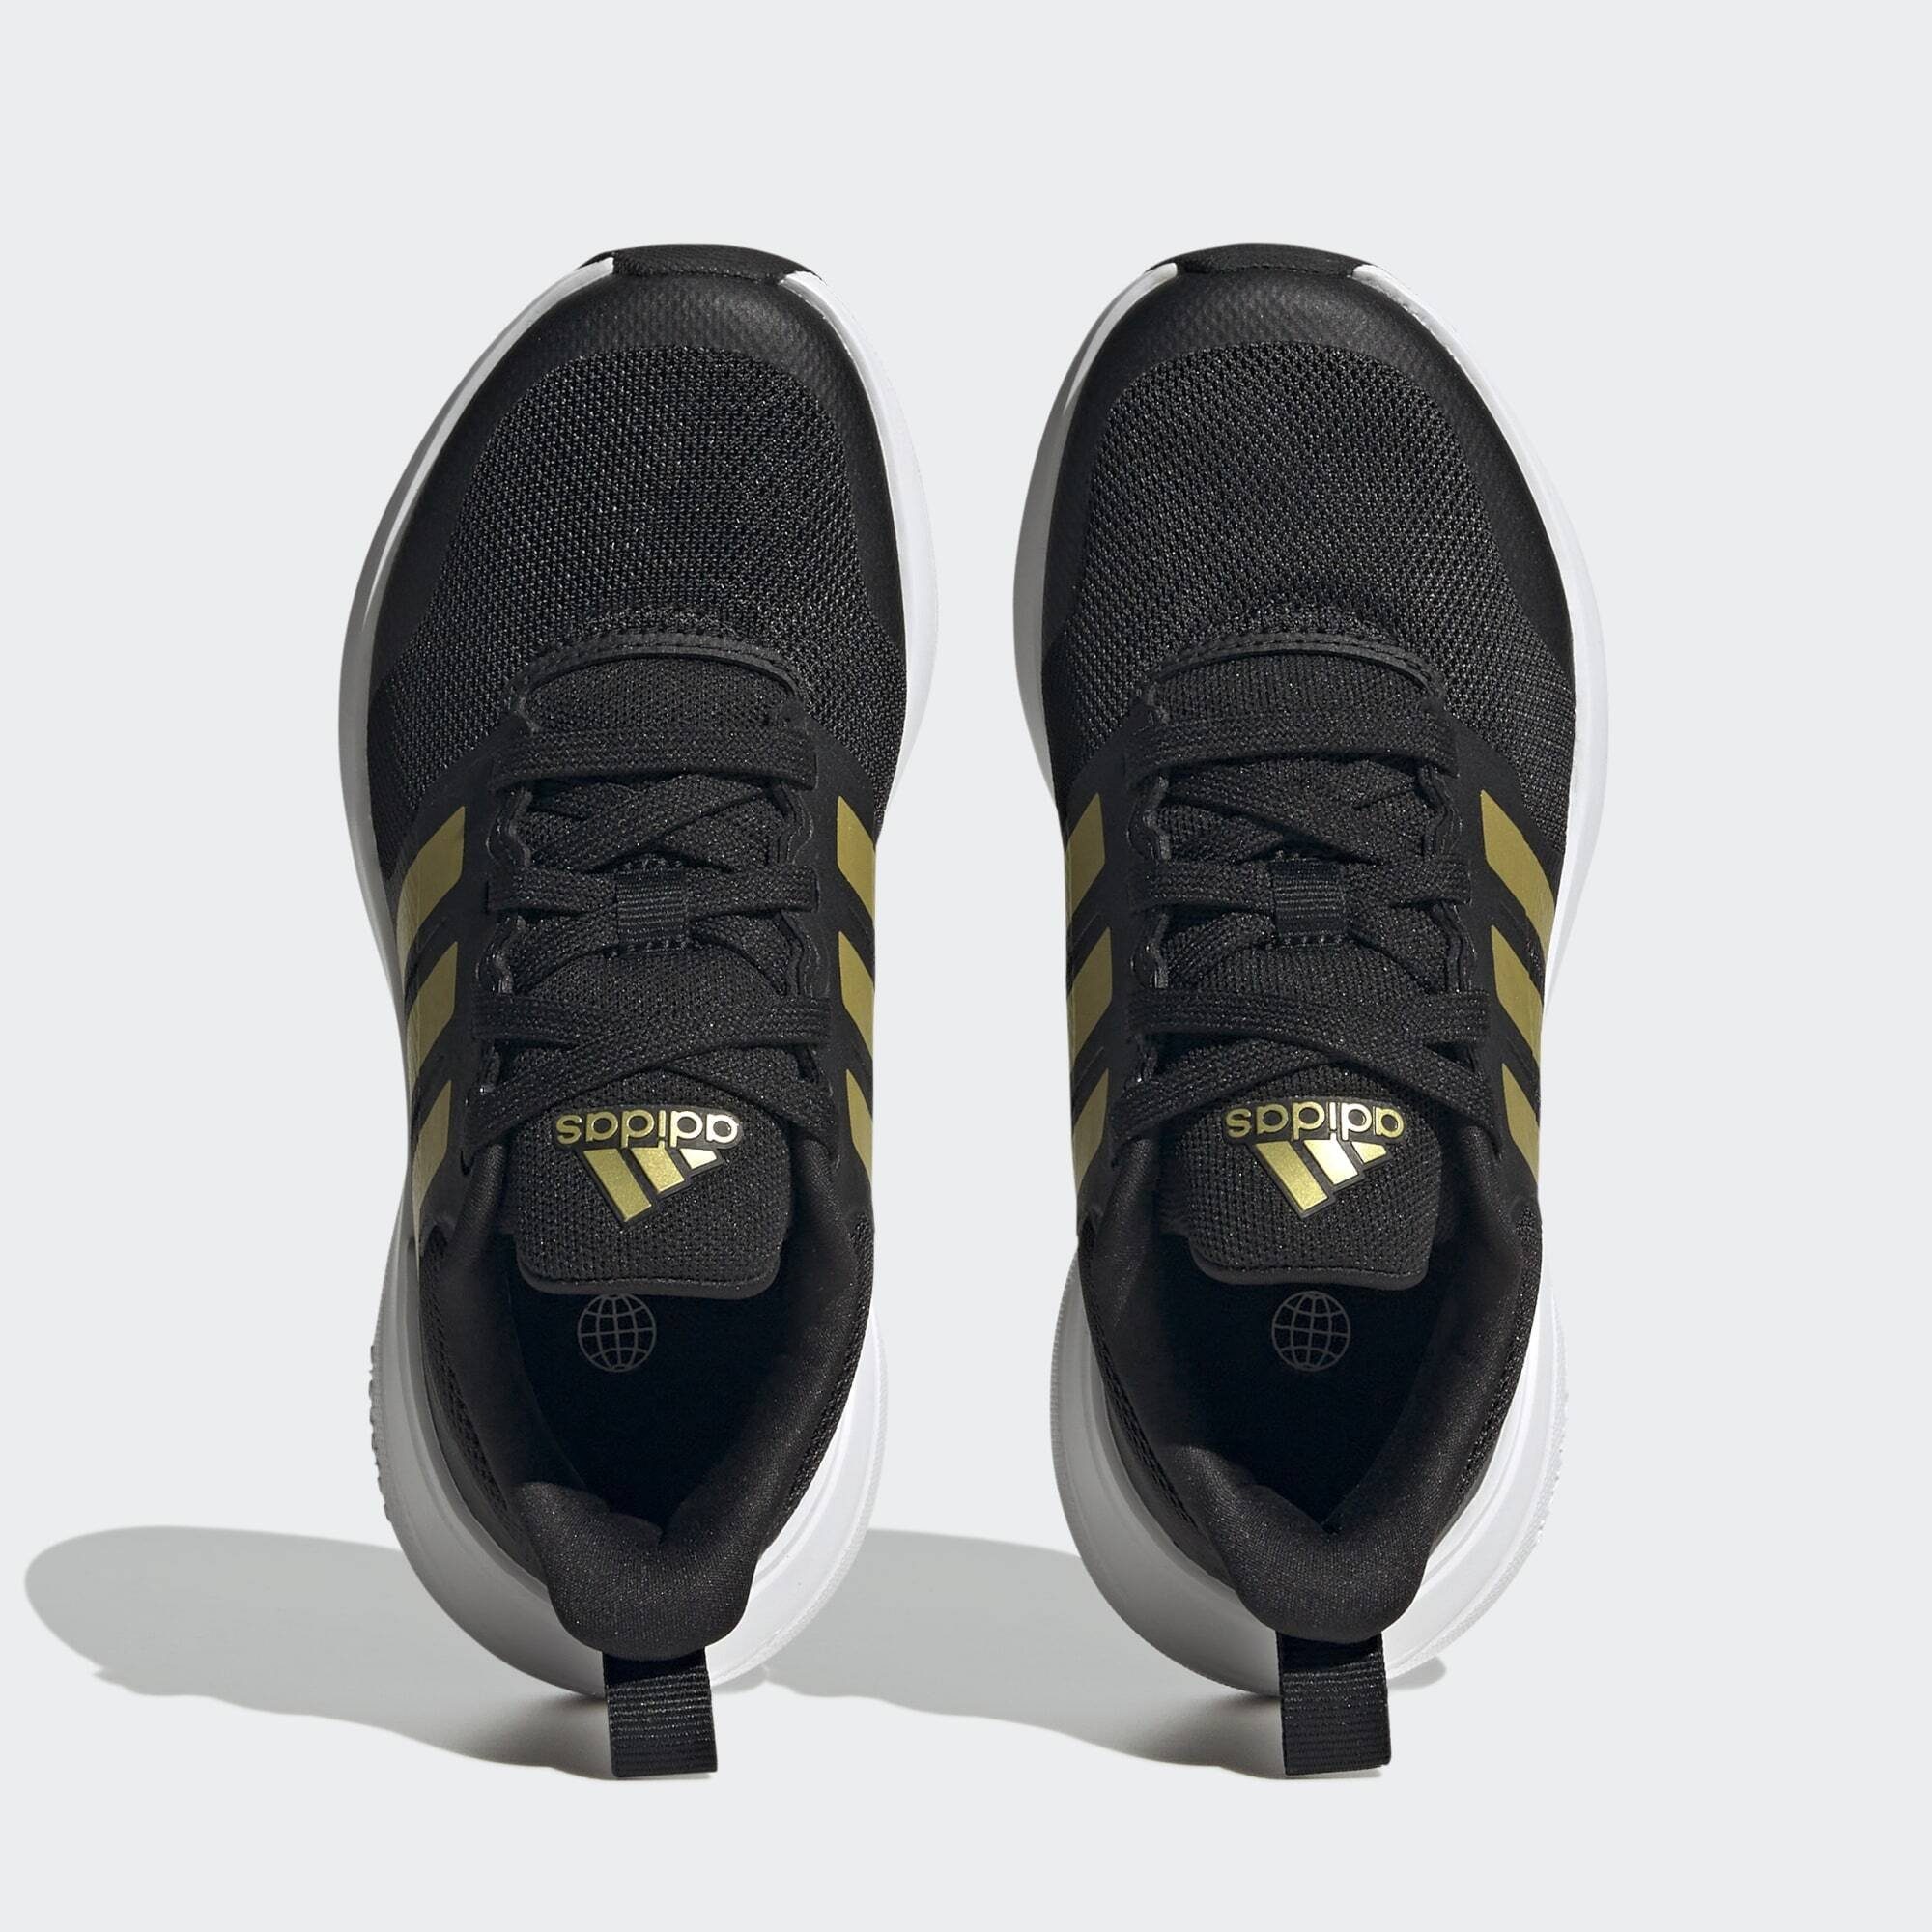 CLOUDFOAM Sportswear / FORTARUN SCHUH 2.0 Cloud LACE Metallic Sneaker Black Gold White / adidas Core